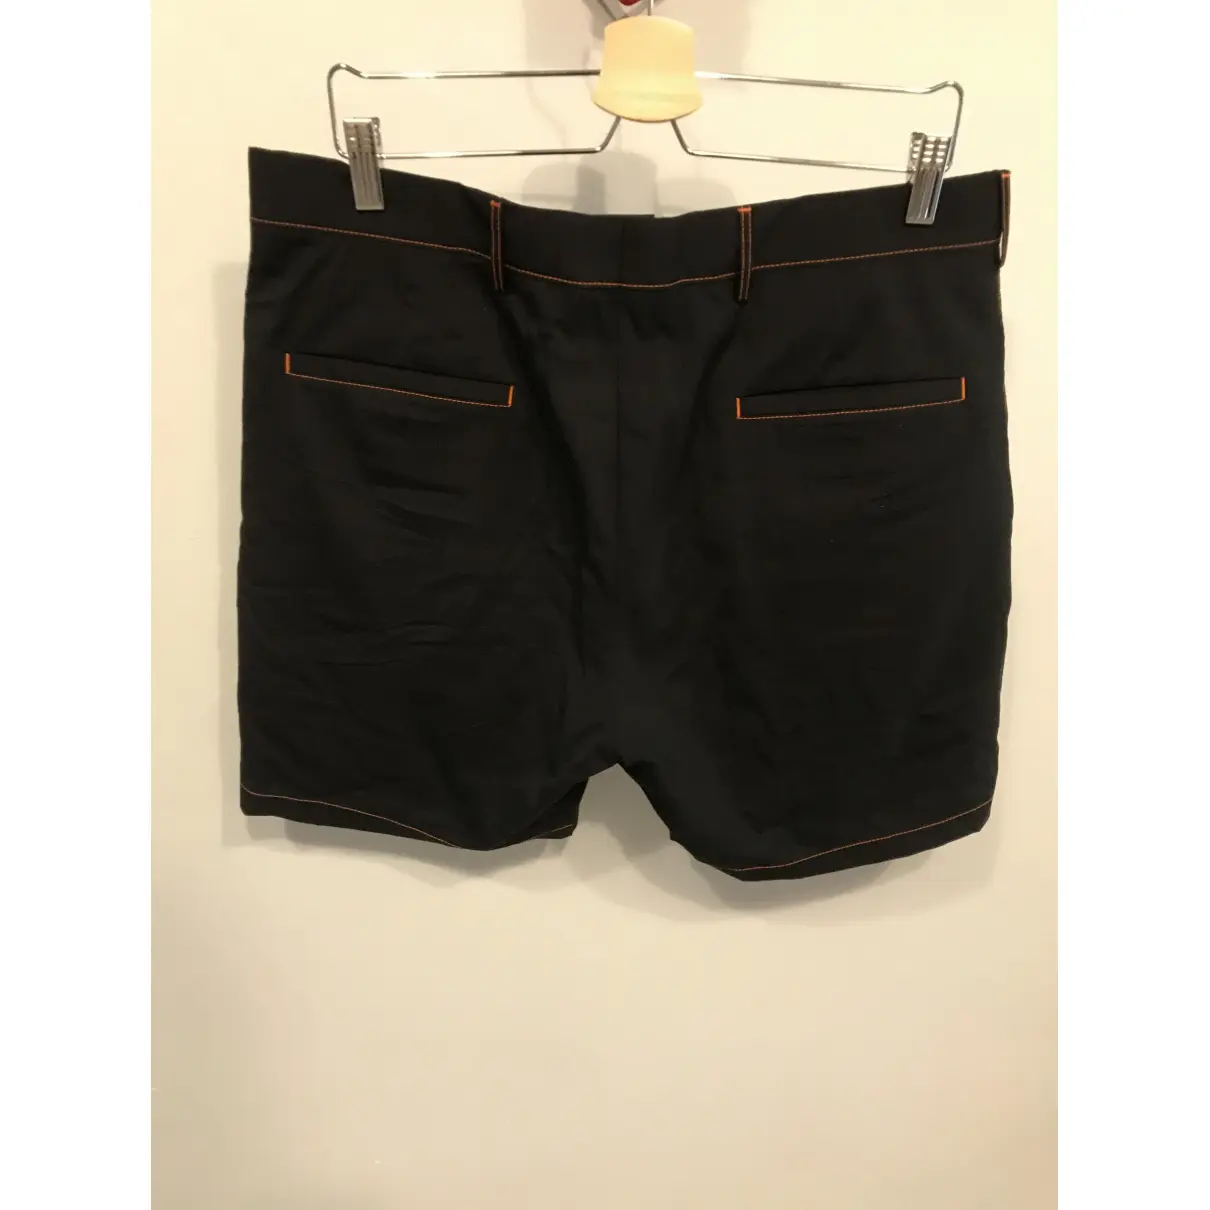 Buy Prada Black Cotton Shorts online